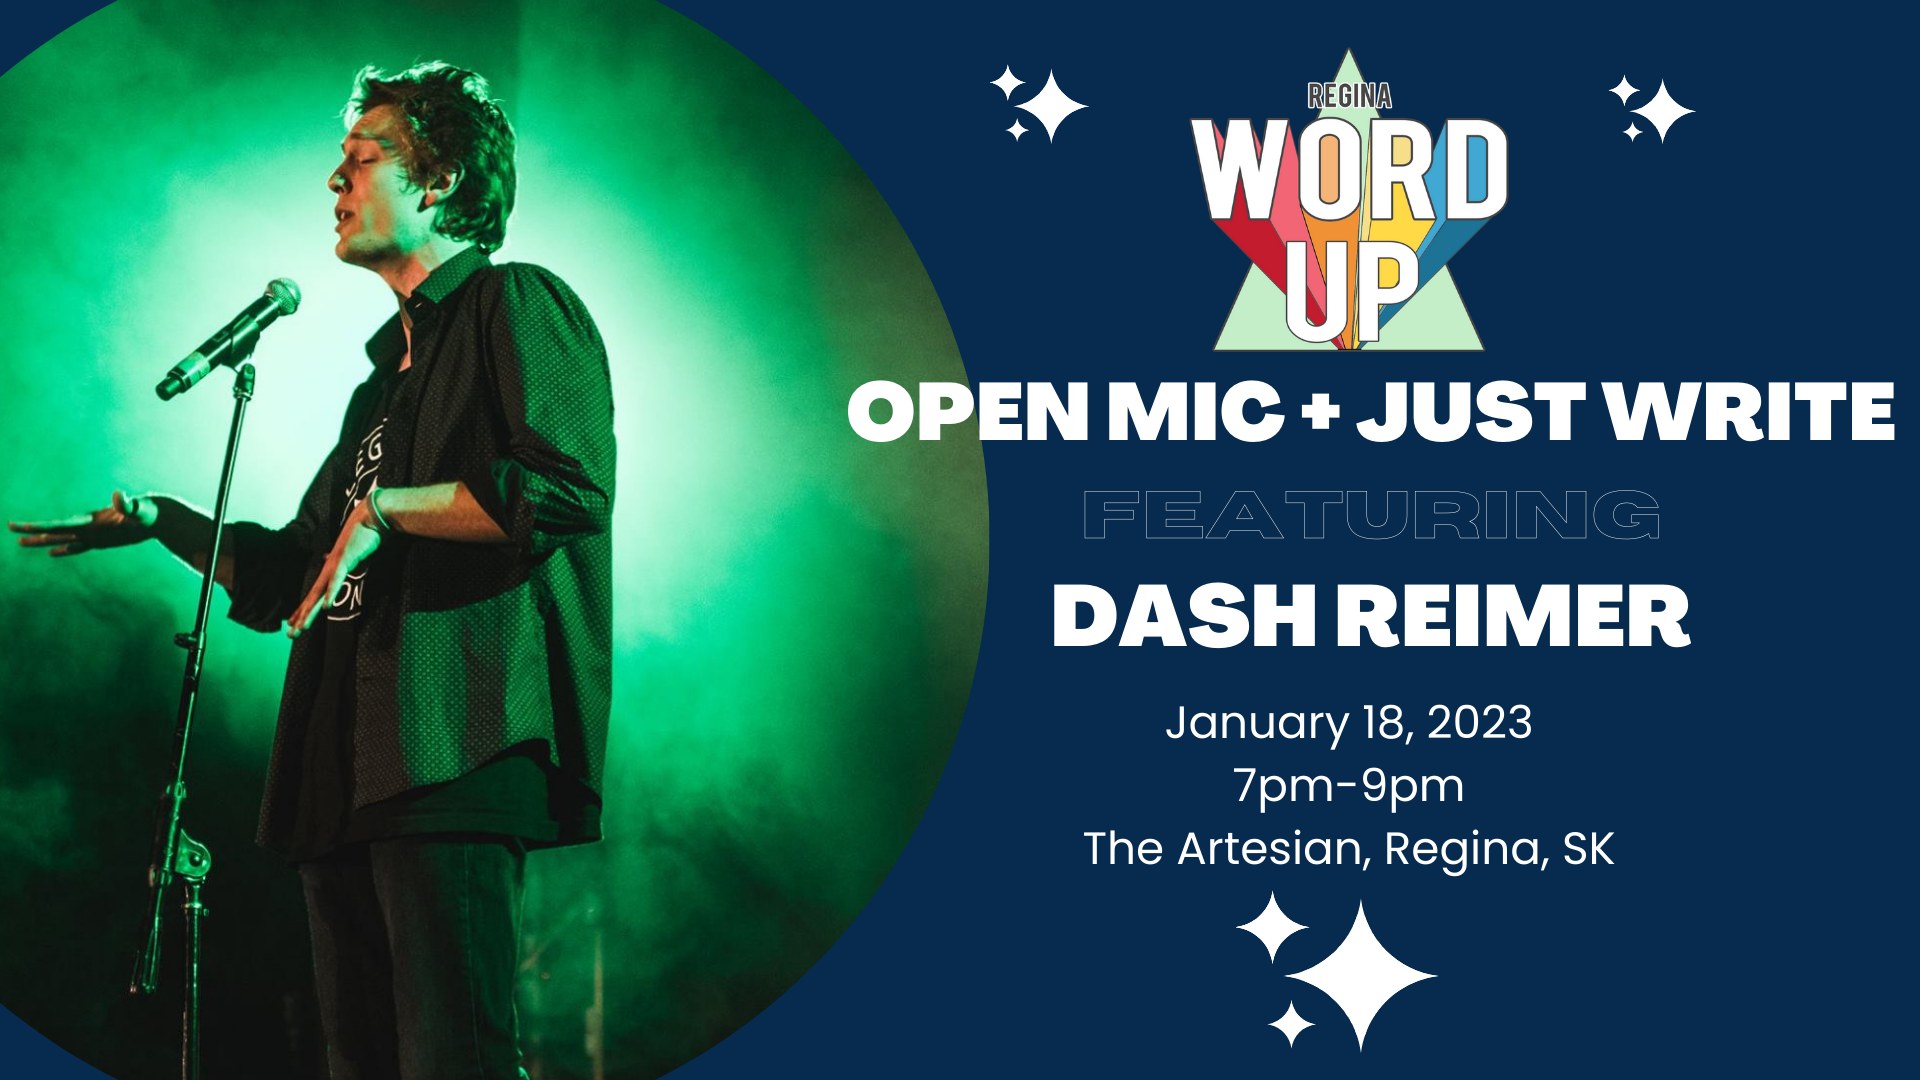 Regina Word Up Open Mic + Just Write featuring Dash Reimer